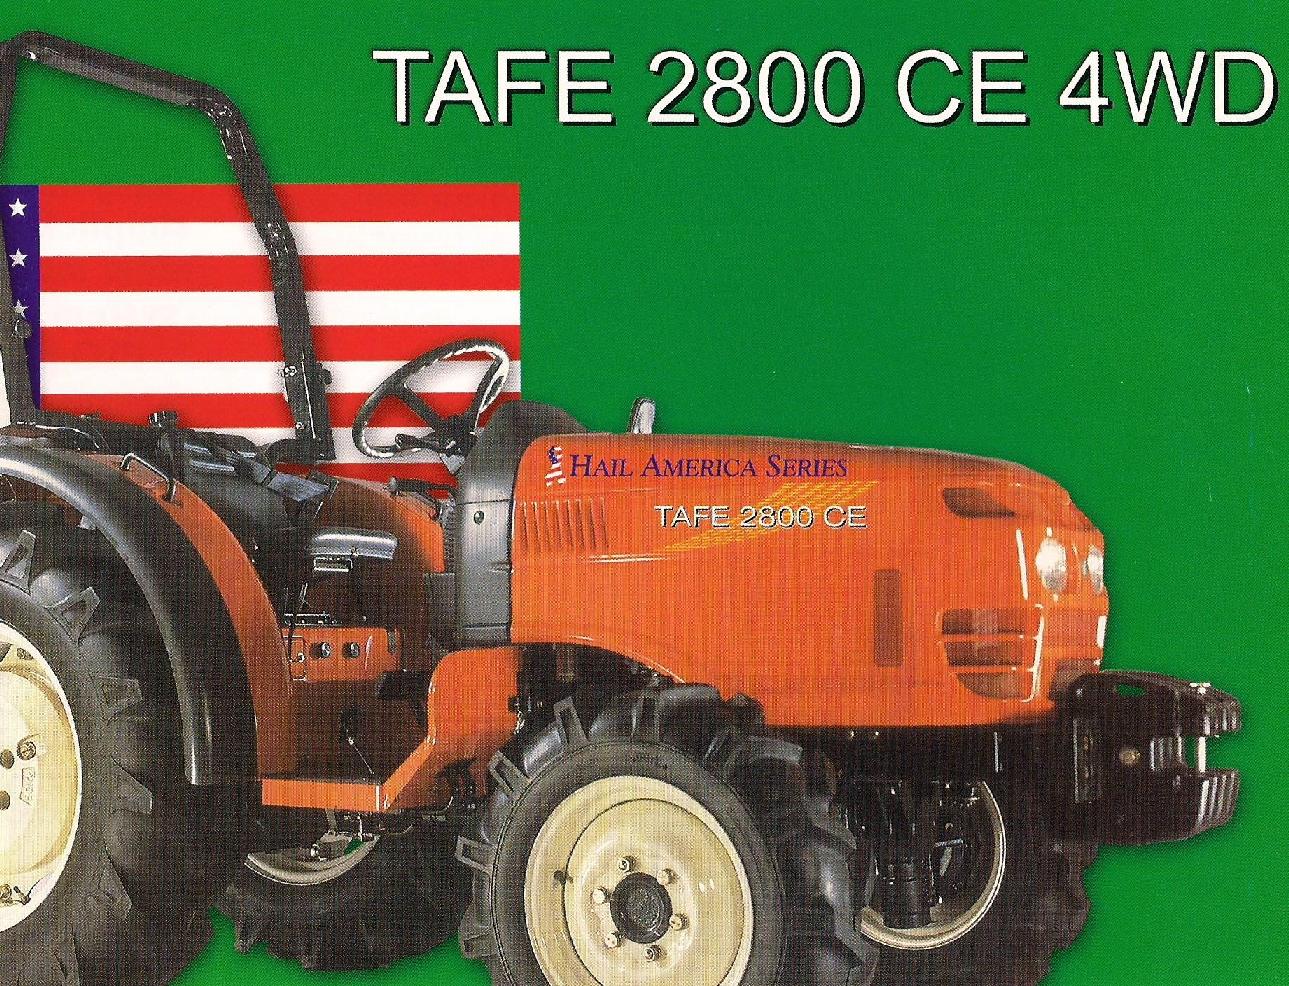 Tafe 2800 CE Hail America Series MFWD